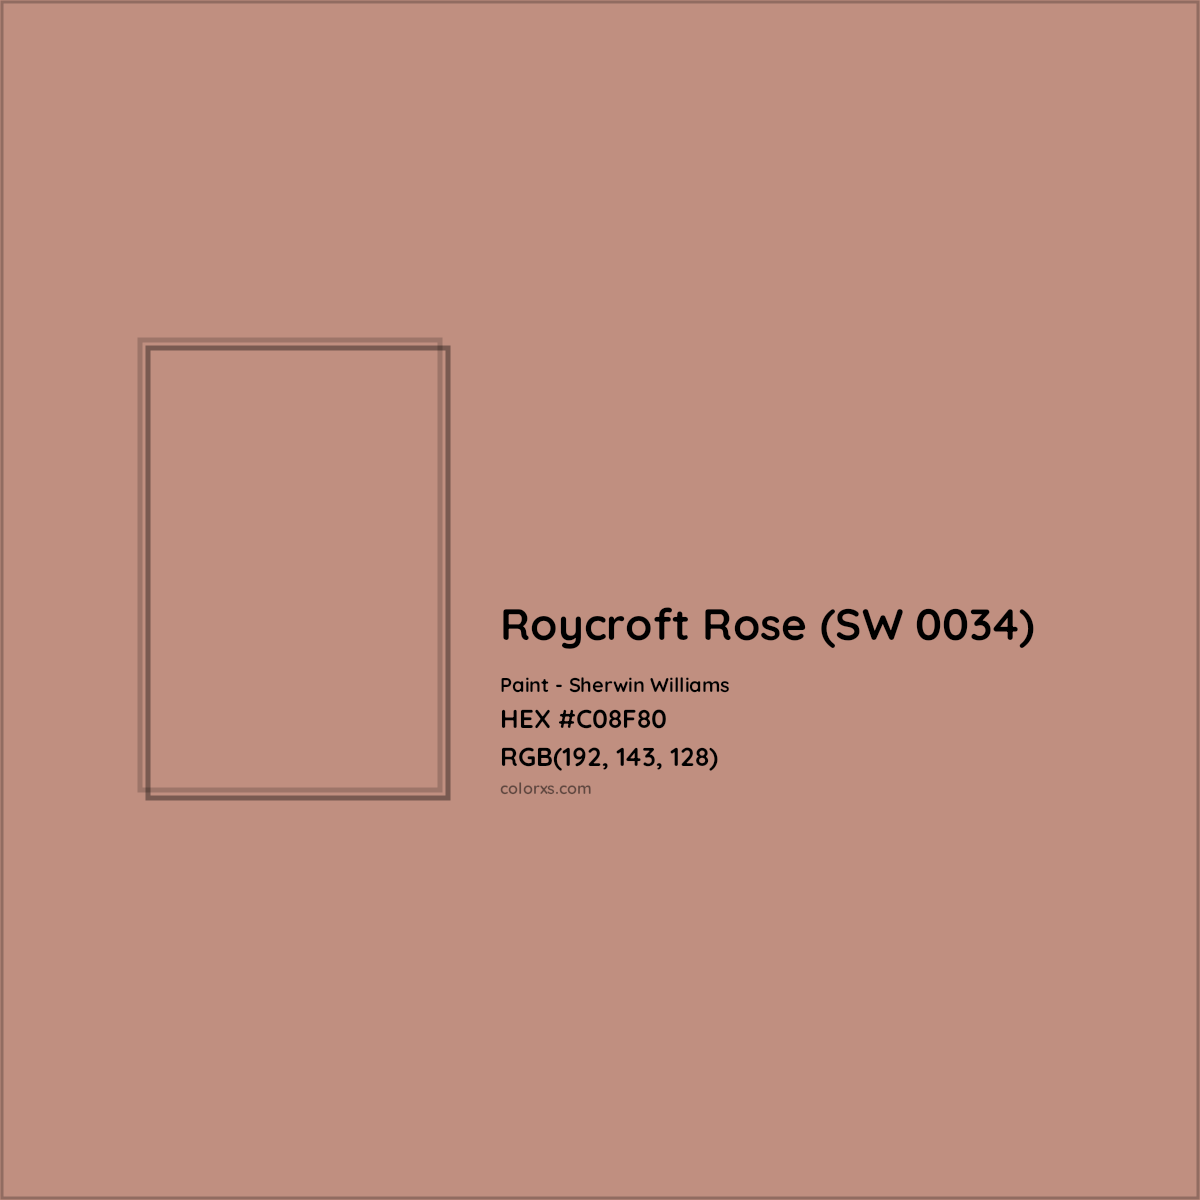 HEX #C08F80 Roycroft Rose (SW 0034) Paint Sherwin Williams - Color Code